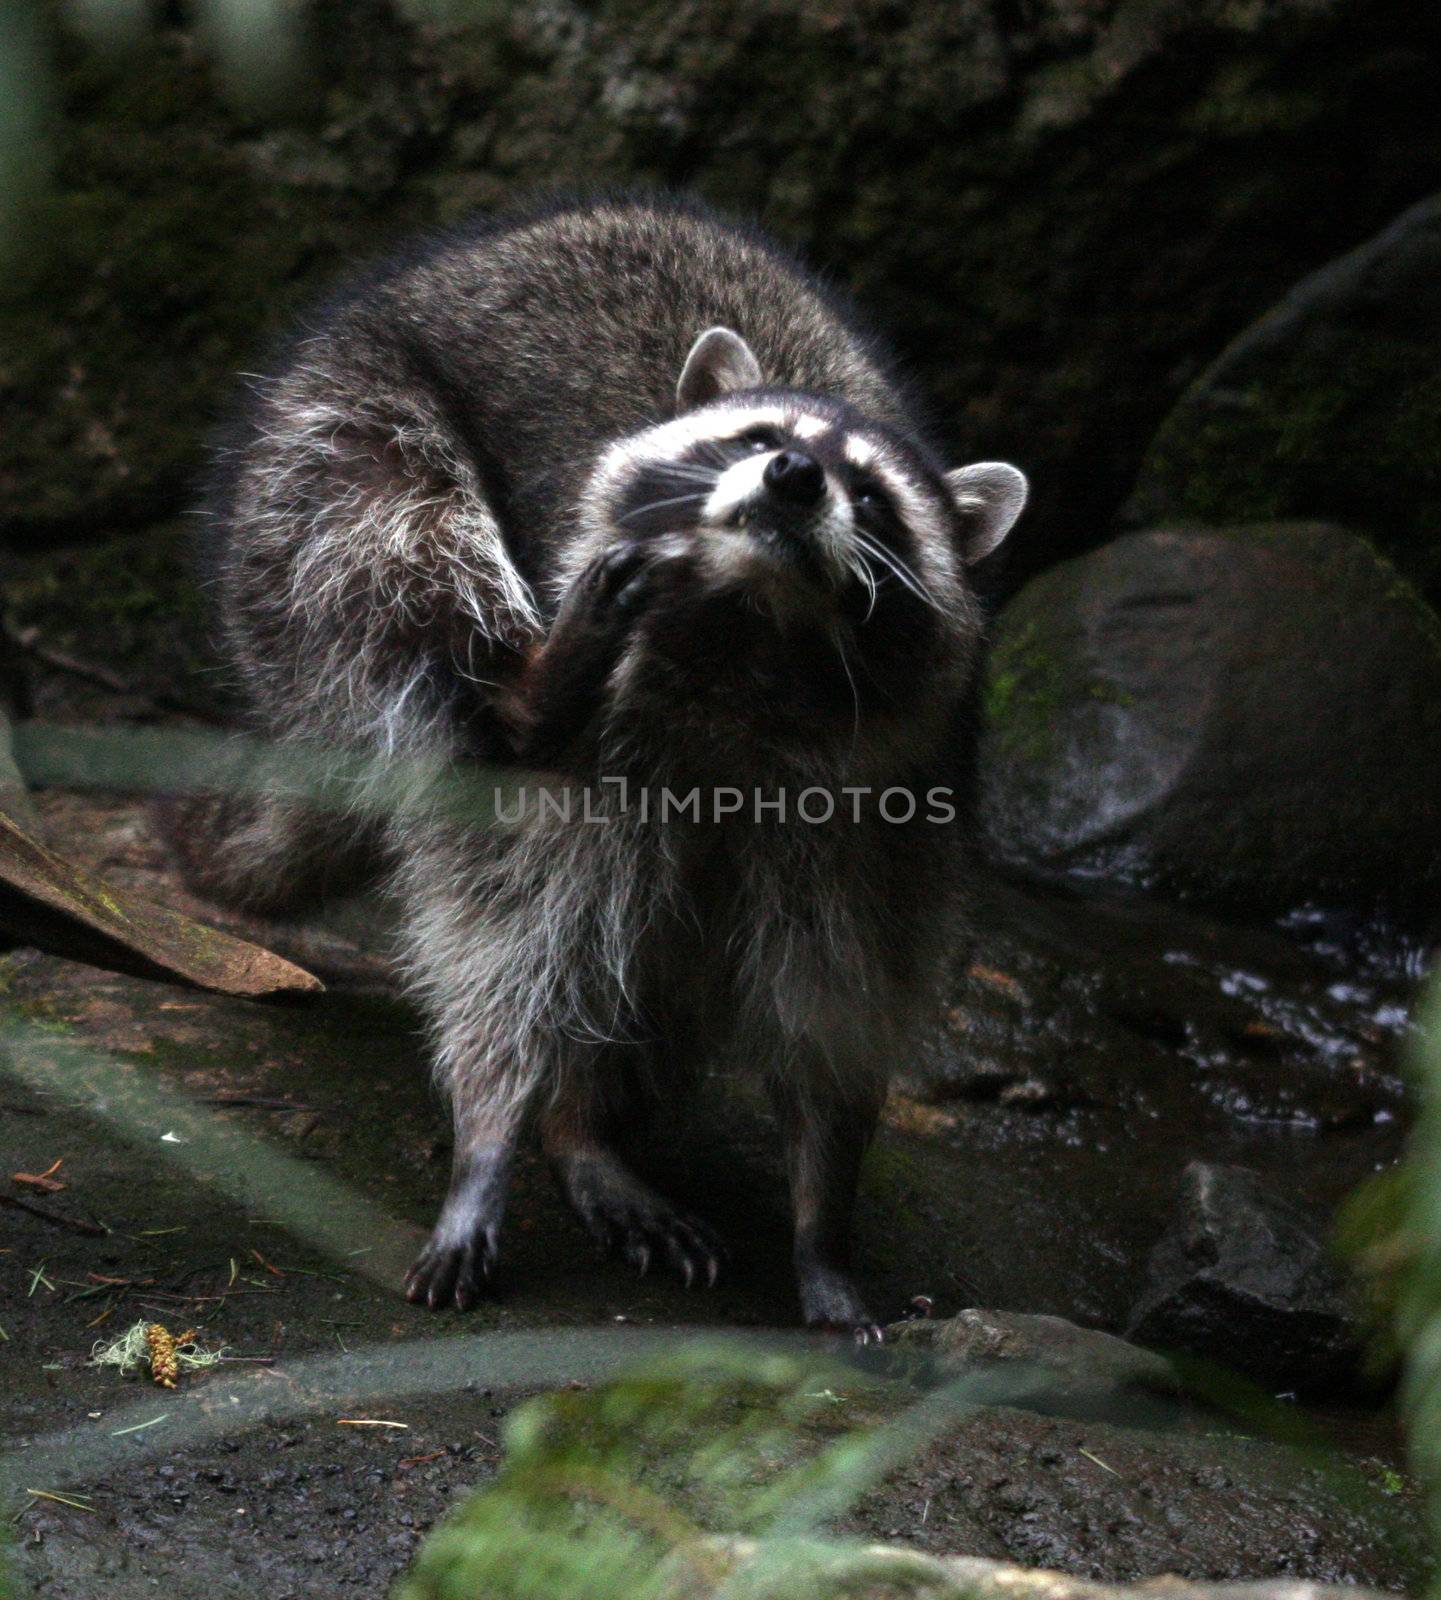 Raccoon.  Photo taken at Northwest Trek Wildlife Park, WA.